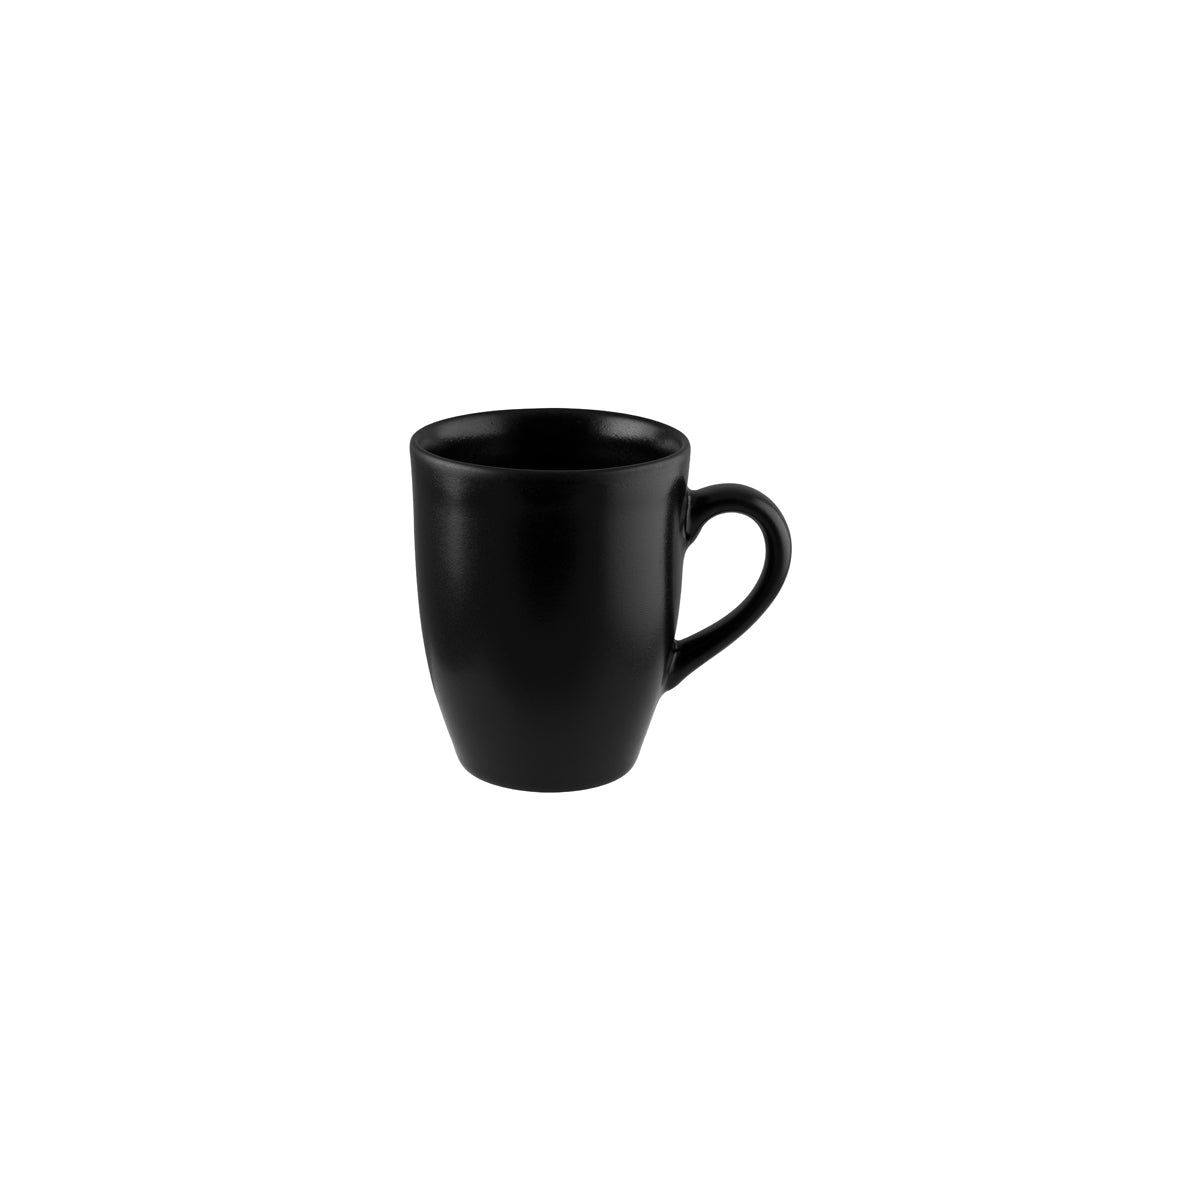 130778 Bonna Notte Black Conic Mug 85x105mm/330ml Tomkin Australia Hospitality Supplies